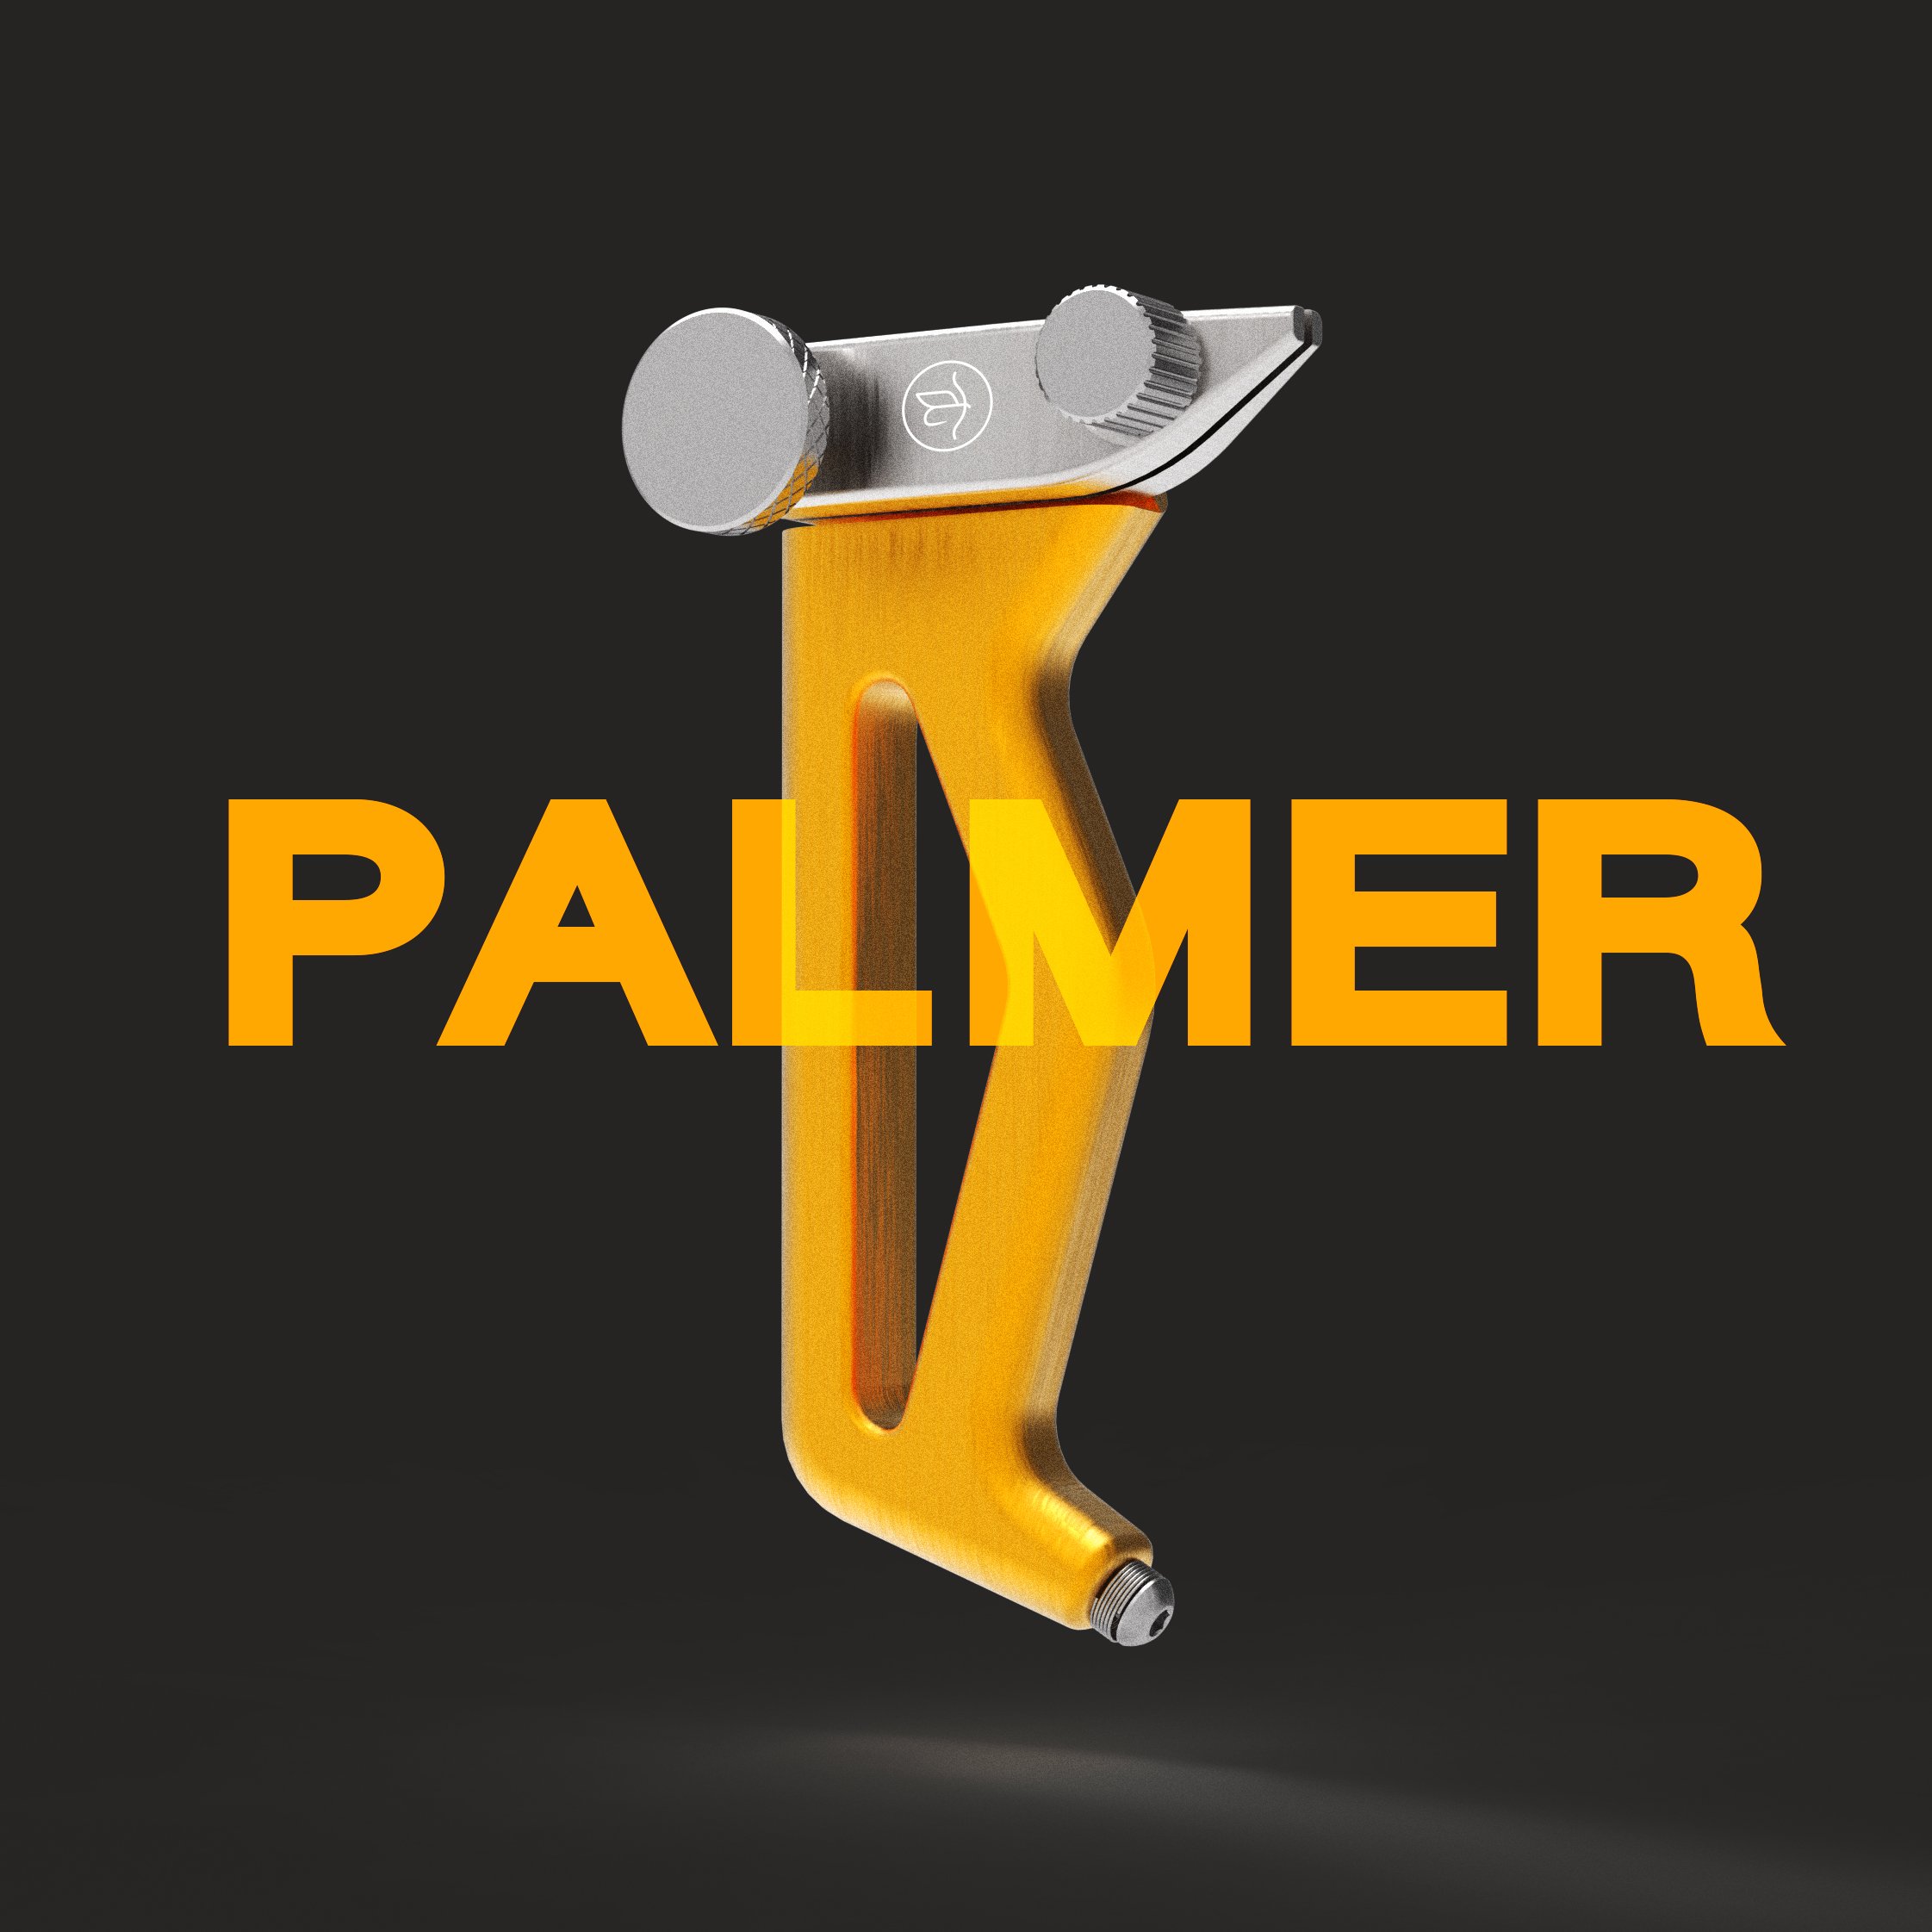 Palmer_launch1.jpg